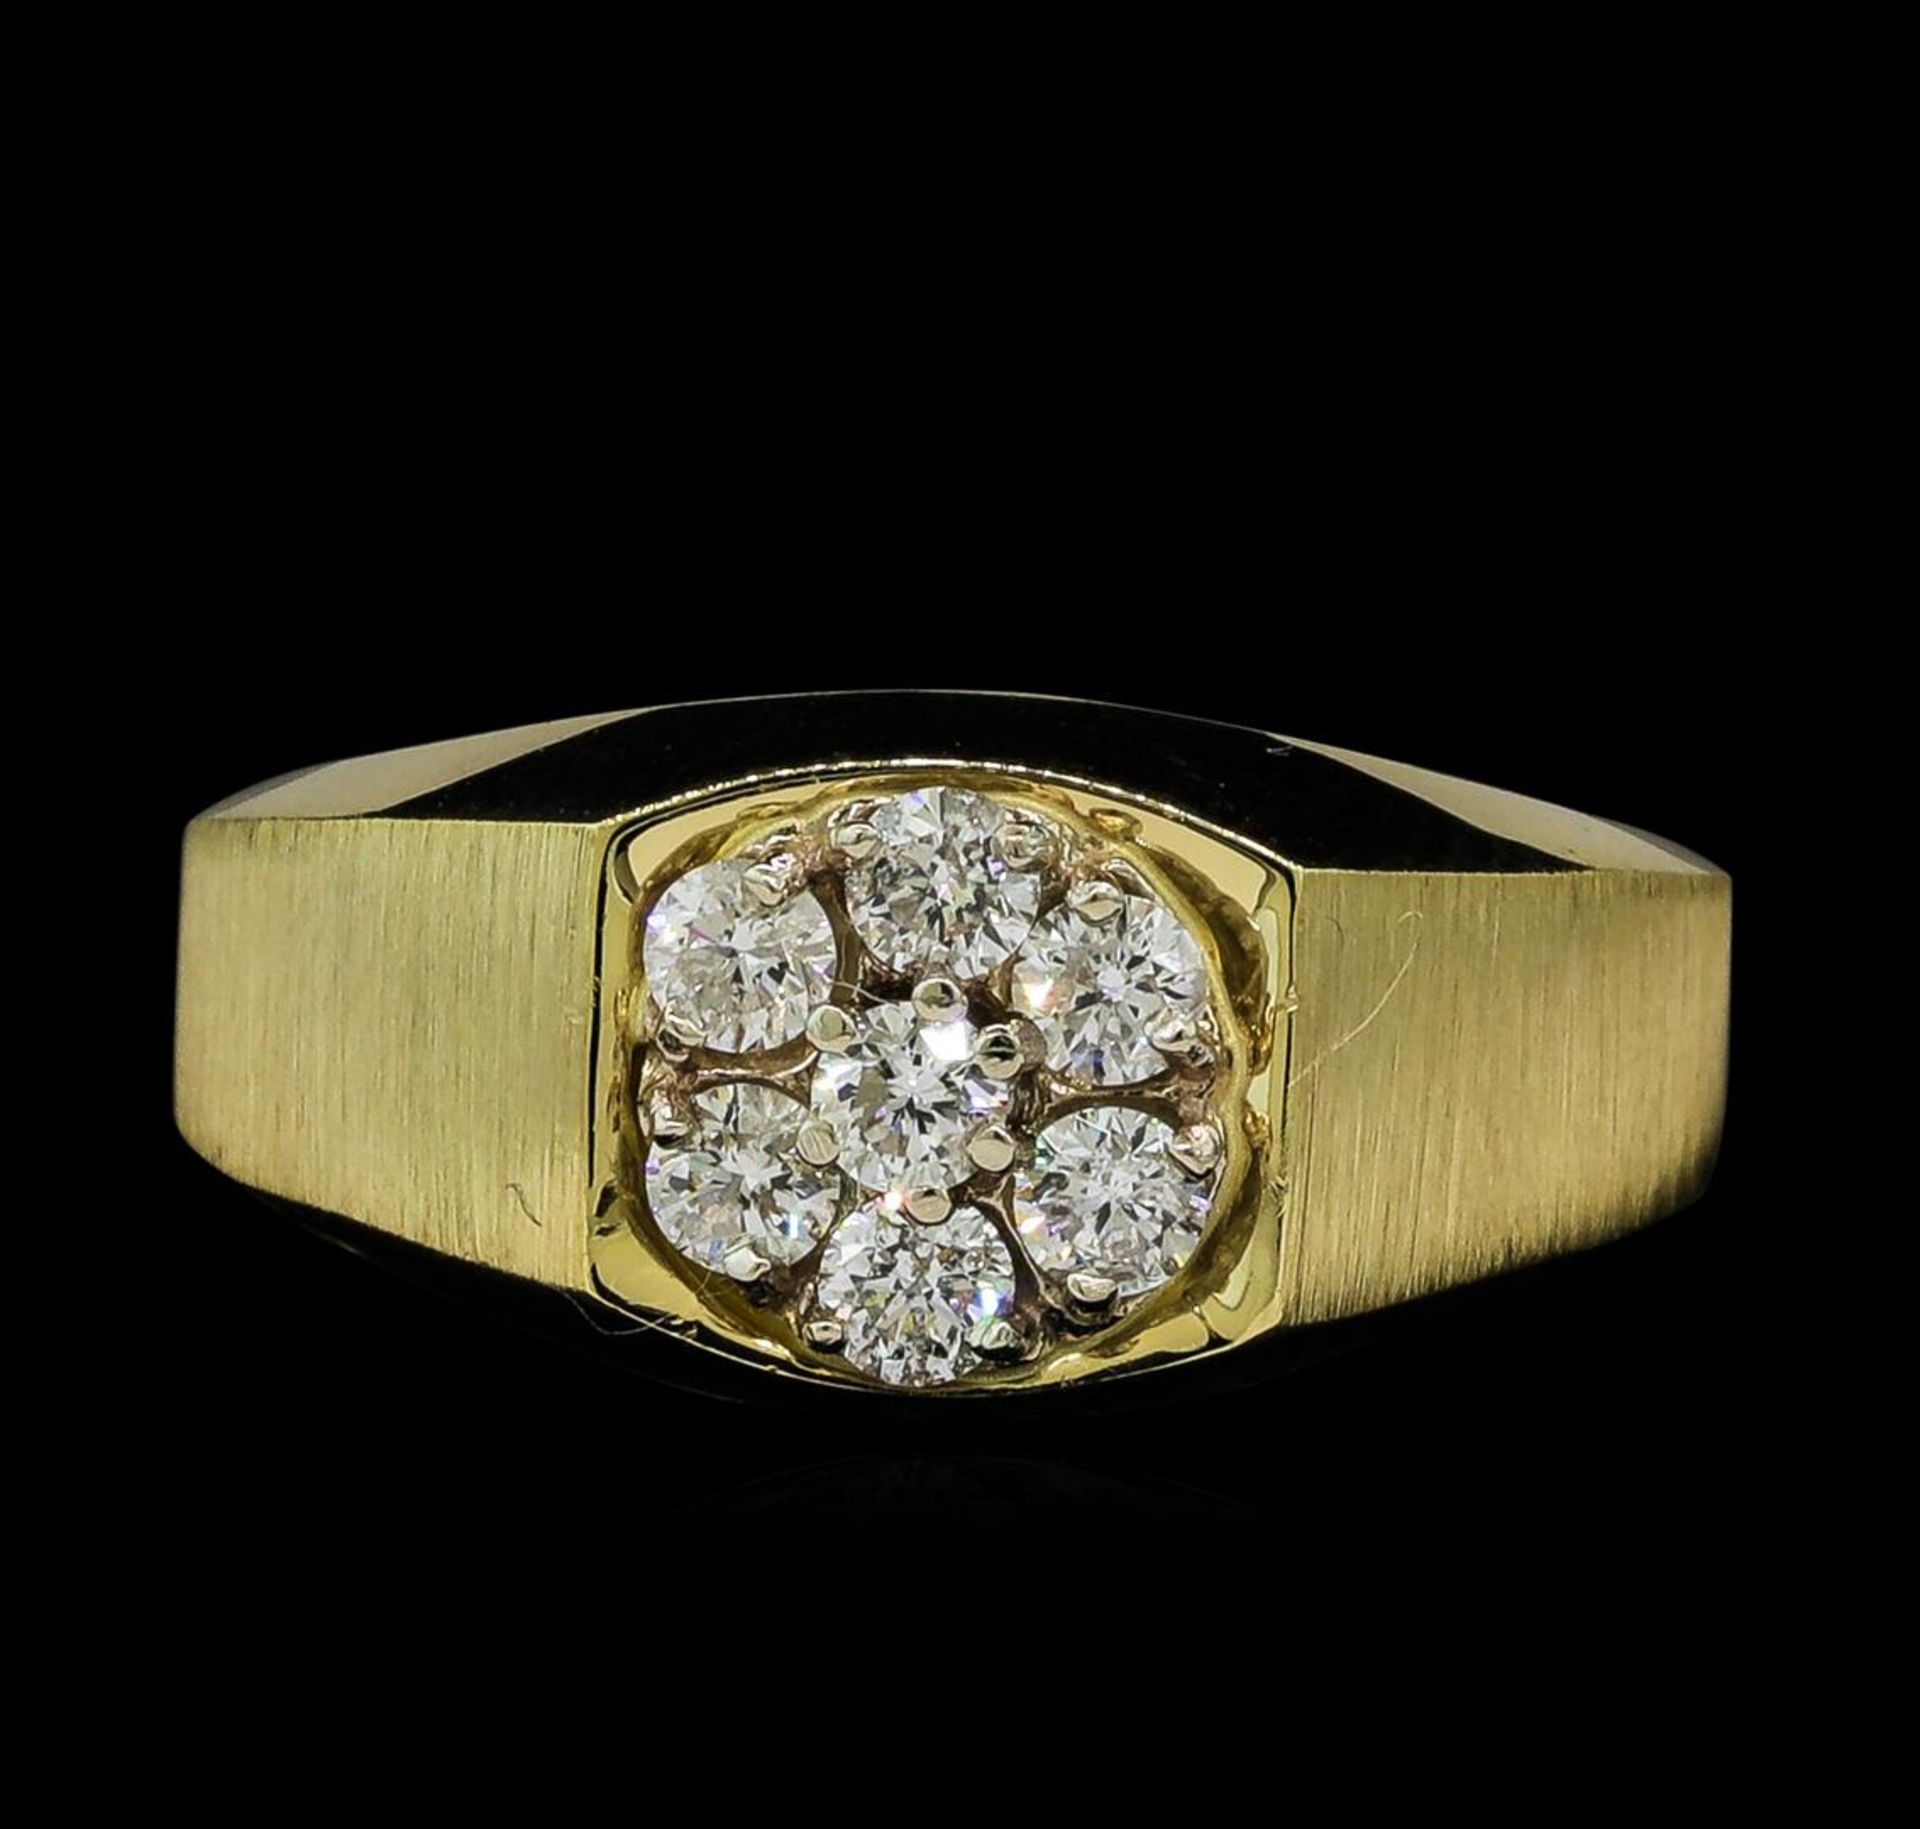 0.56 ctw Diamond Ring - 14KT Yellow Gold - Image 2 of 4